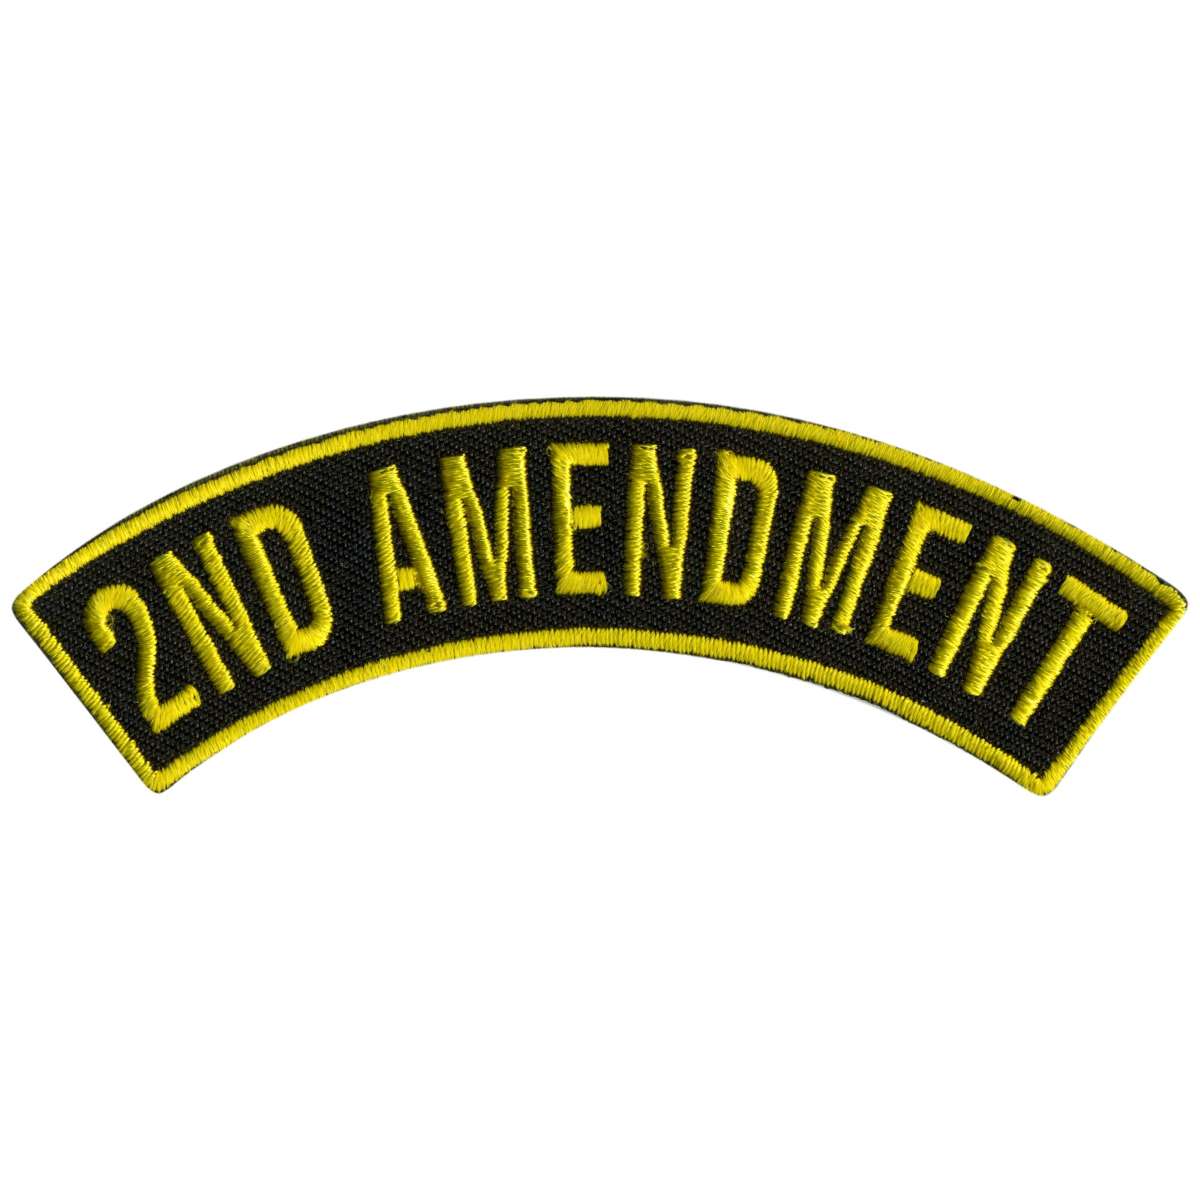 Hot Leathers 2nd Amendment 4” X 1” Top Rocker Patch PPM4102